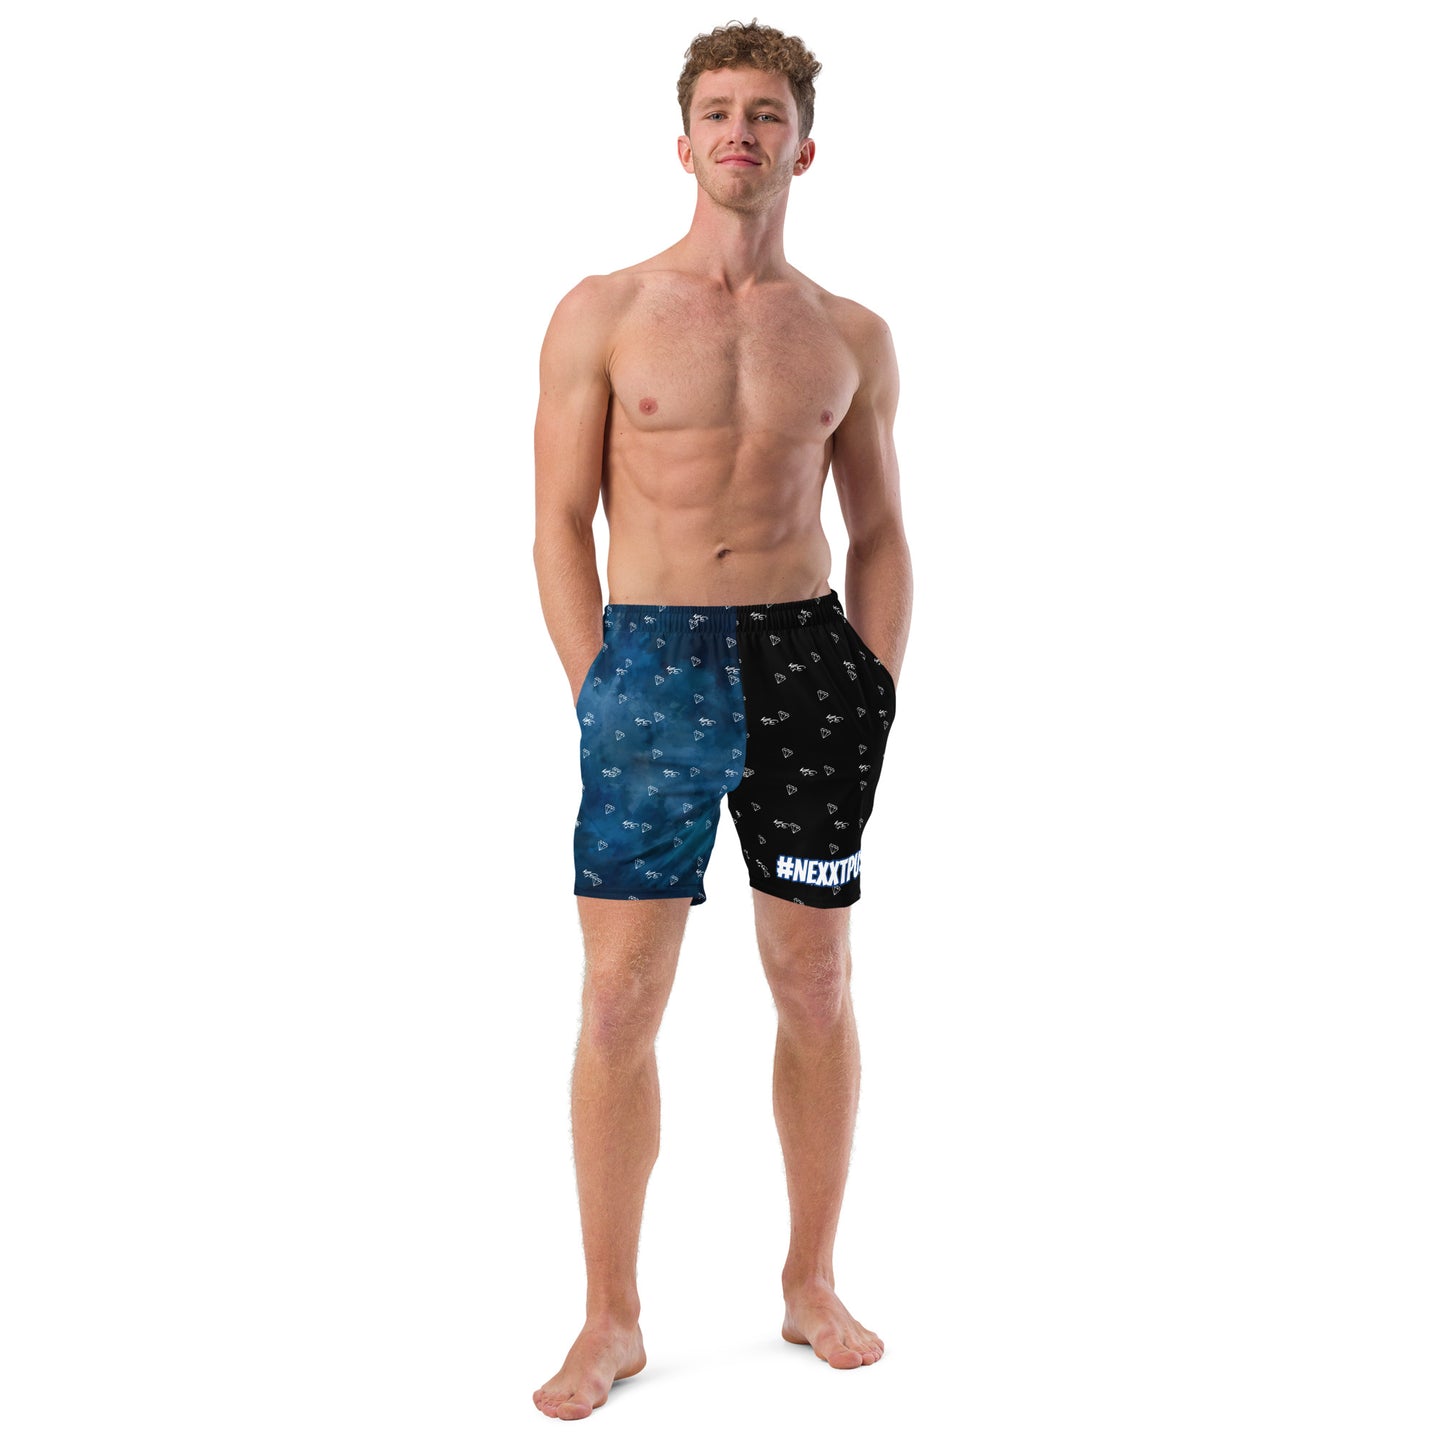 #NEXTPUSH Eco Men's swim trunks